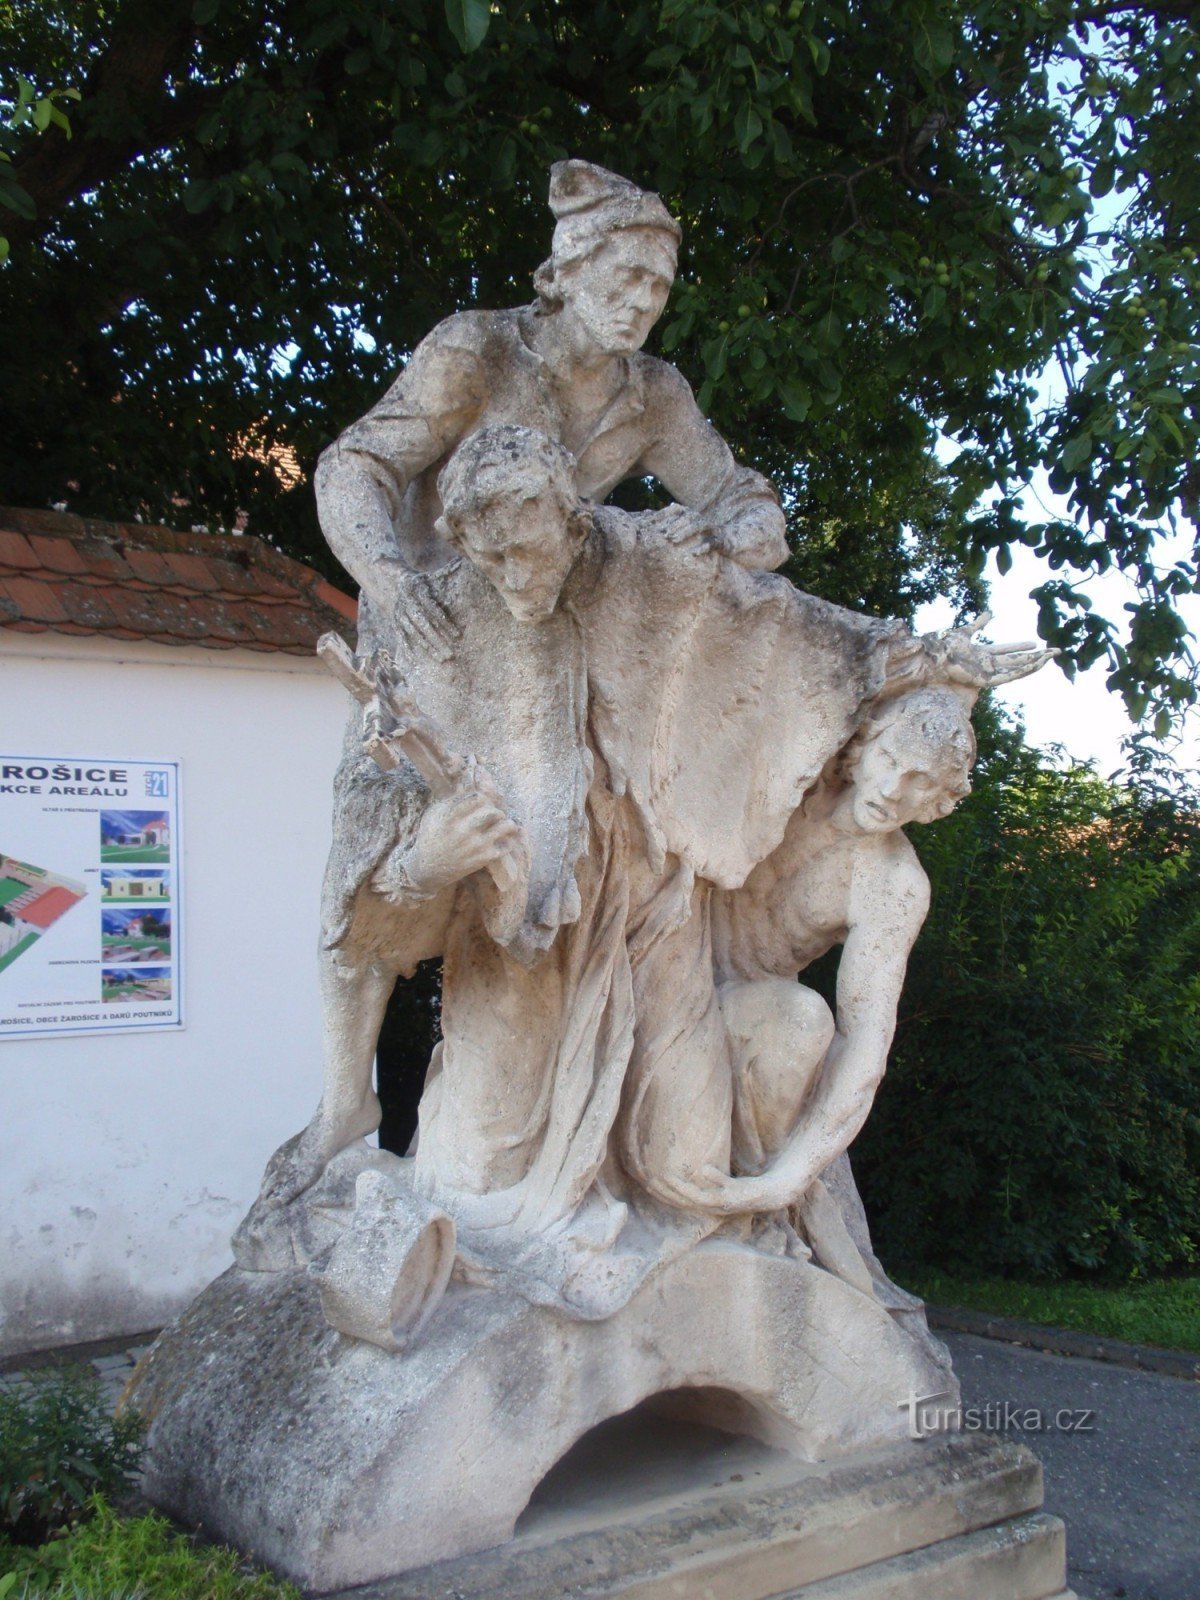 Statues in Žarošice